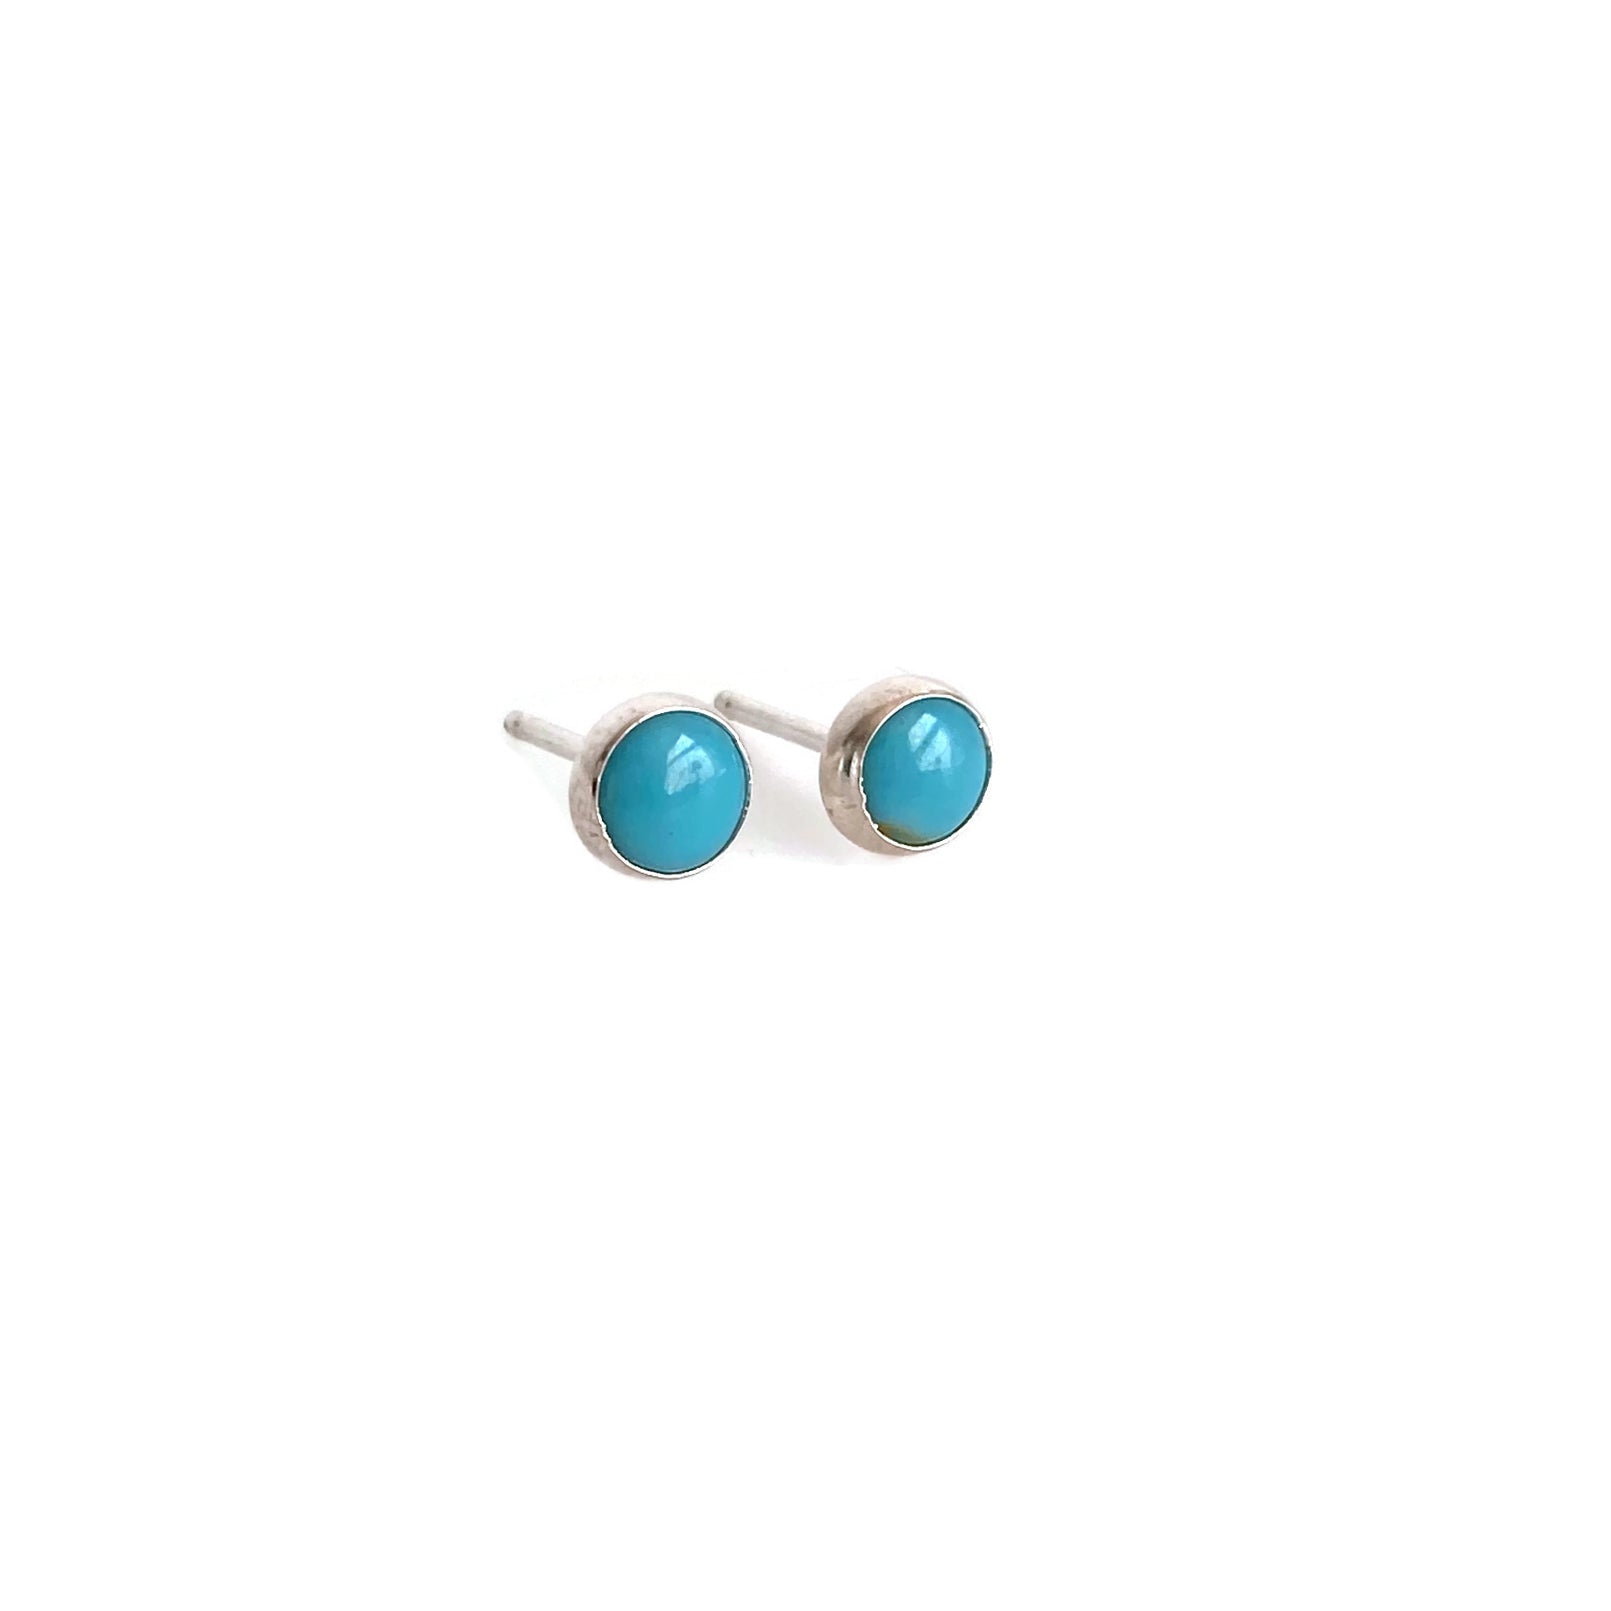 sterling silver turquoise stud earrings are December birthstone earrings. 